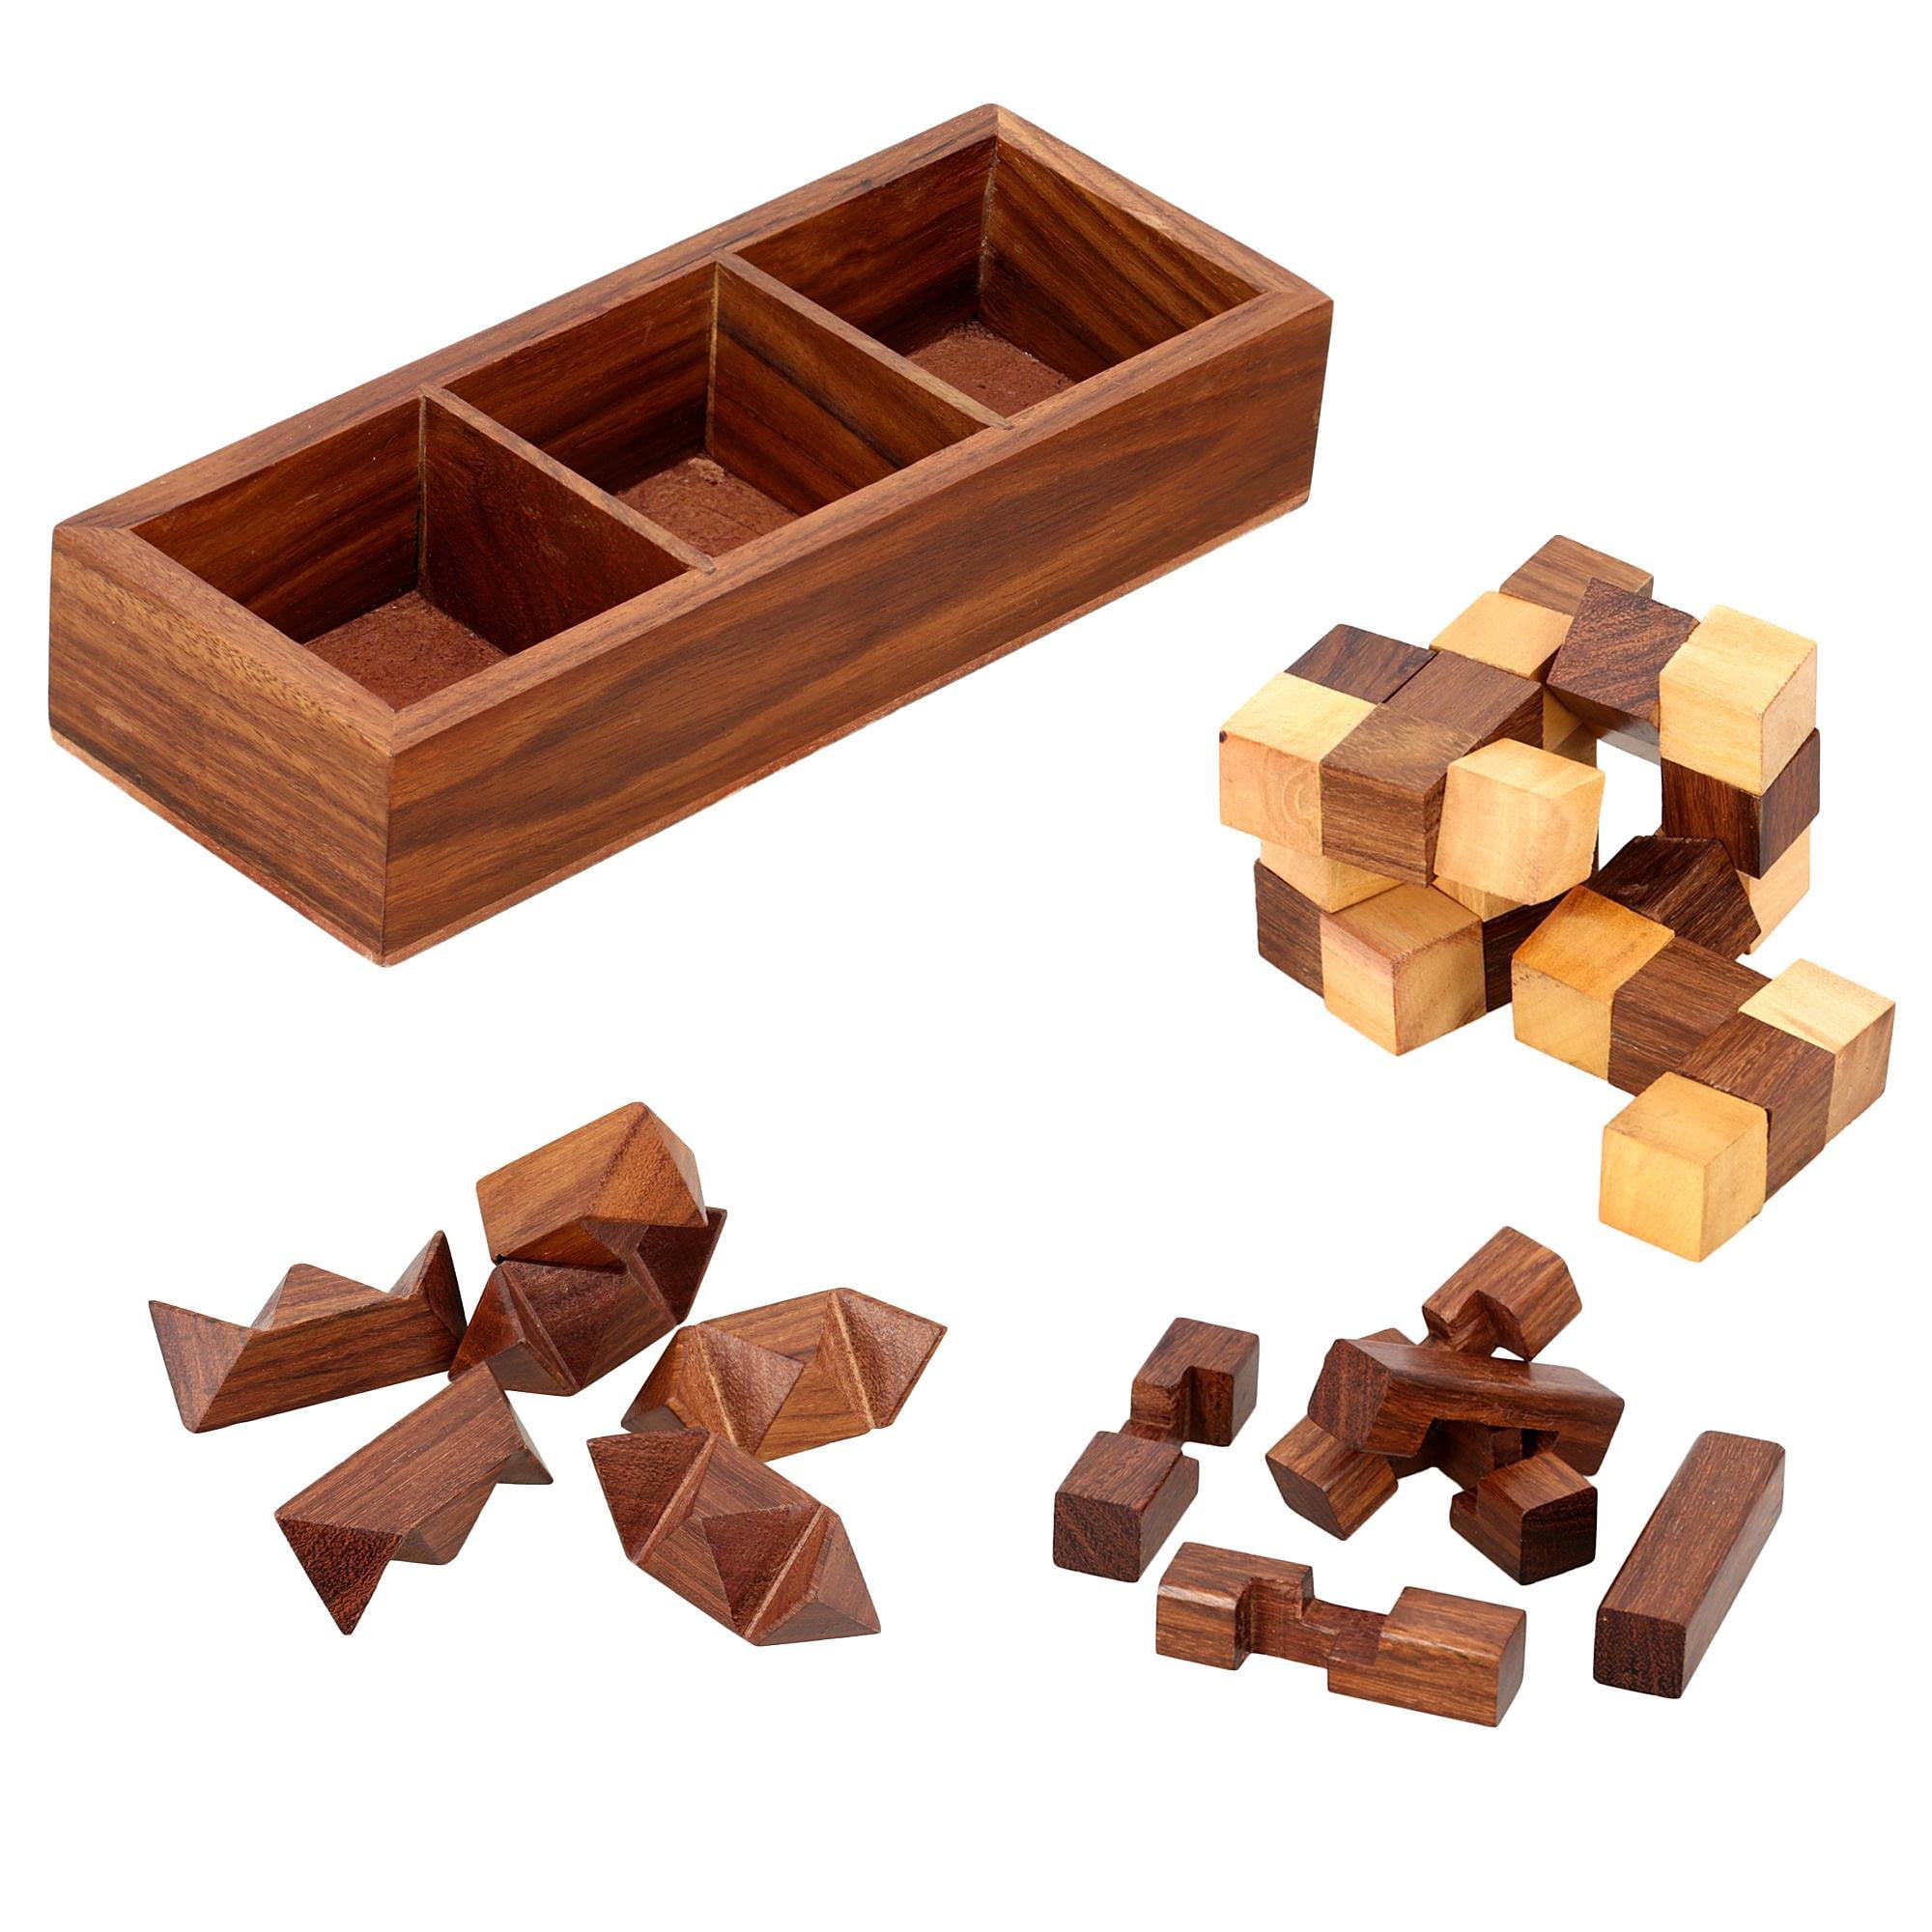 3 In 1 Wooden 3D Puzzle Games Set Teens Adults Diagonal Burr Interlocking Blocks